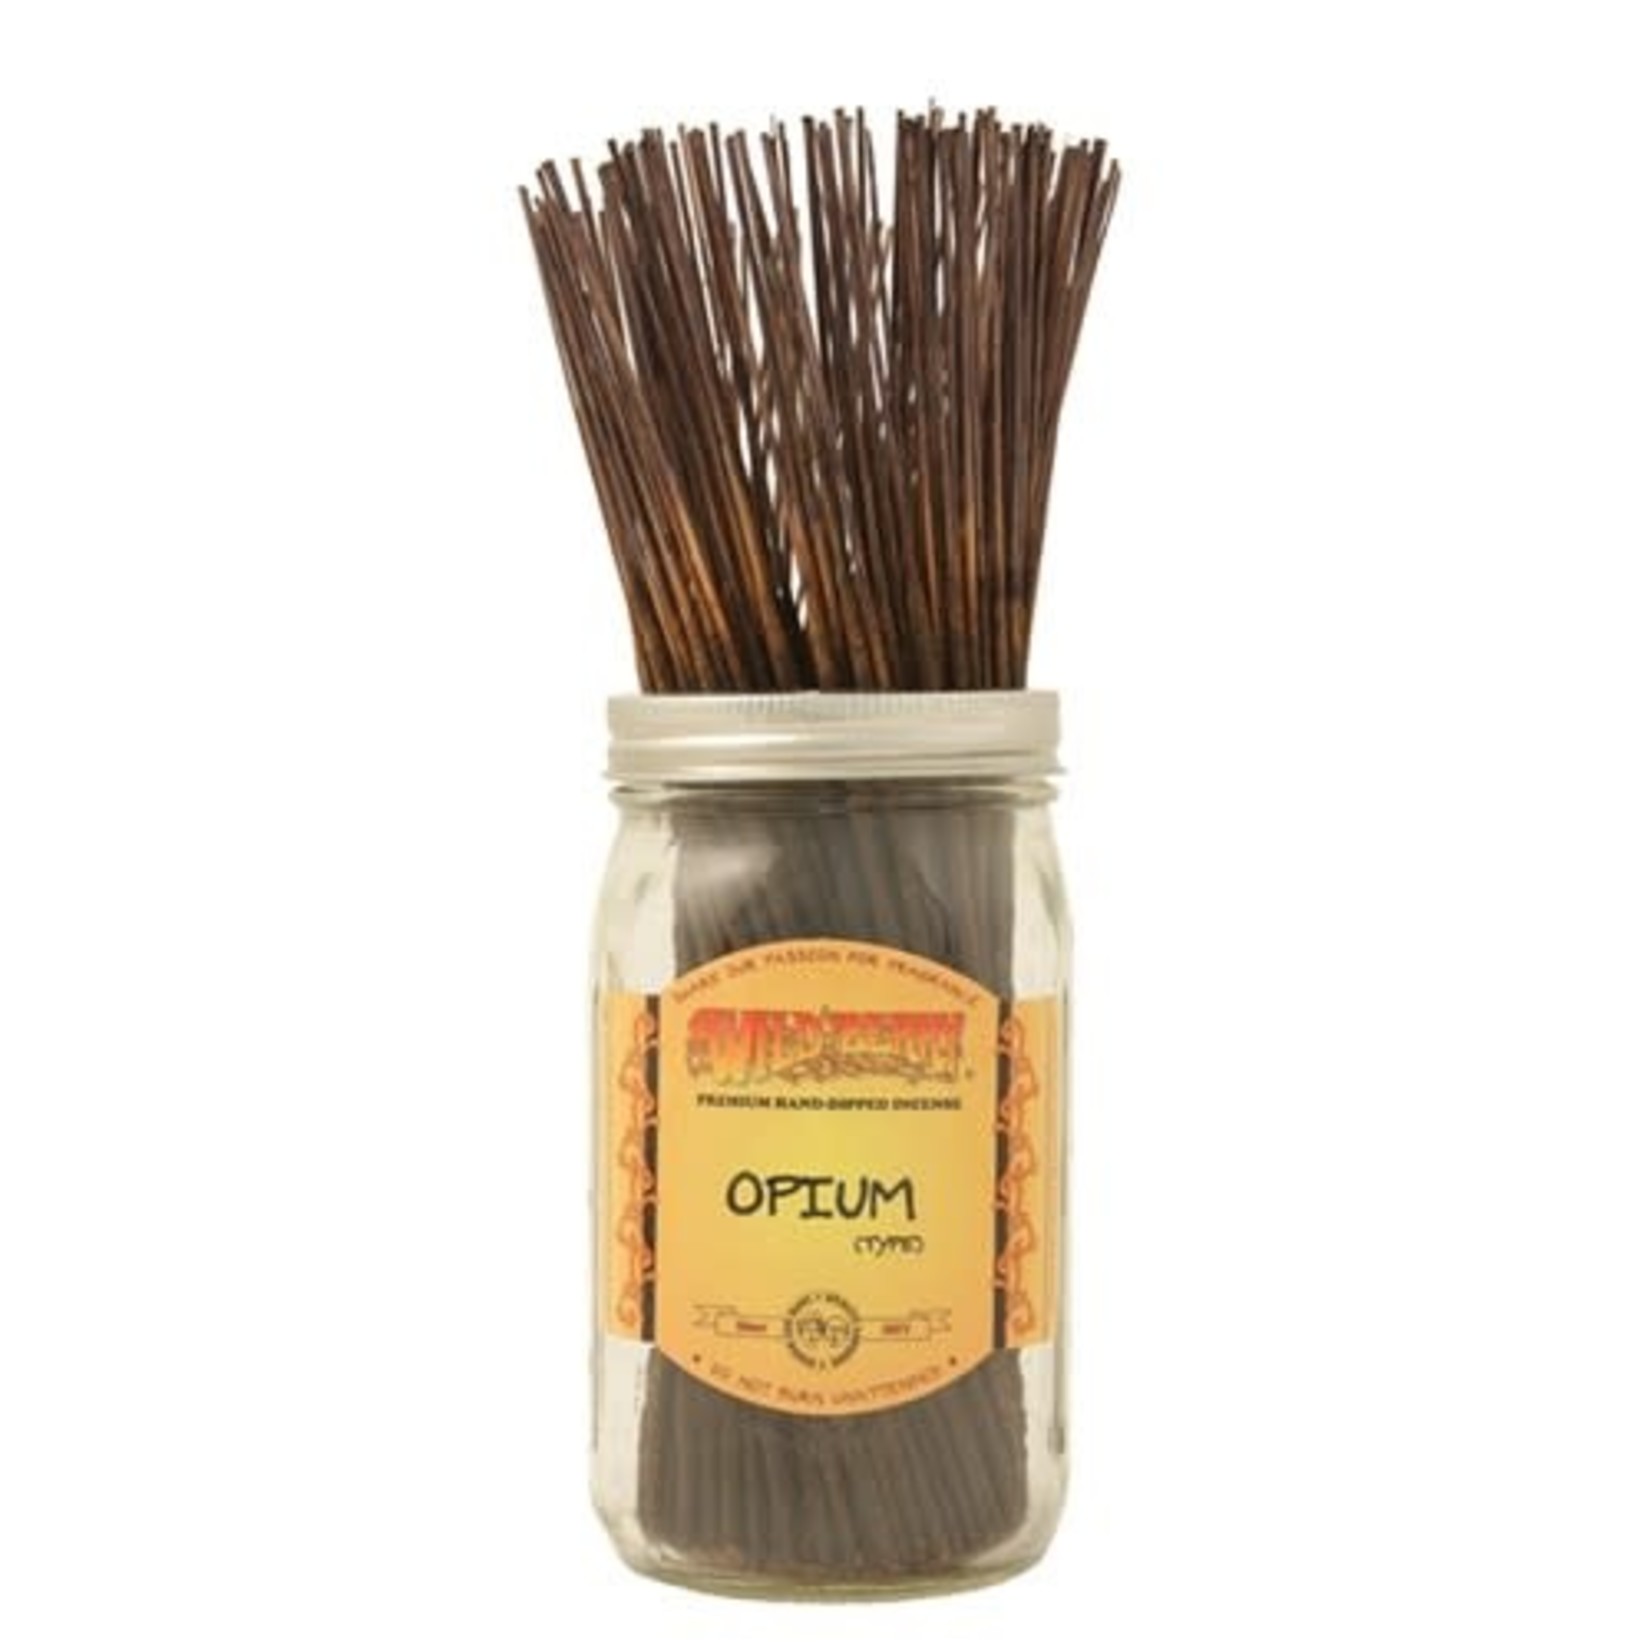 WILD-BERRY Opium (type) Incense Sticks (11" long)